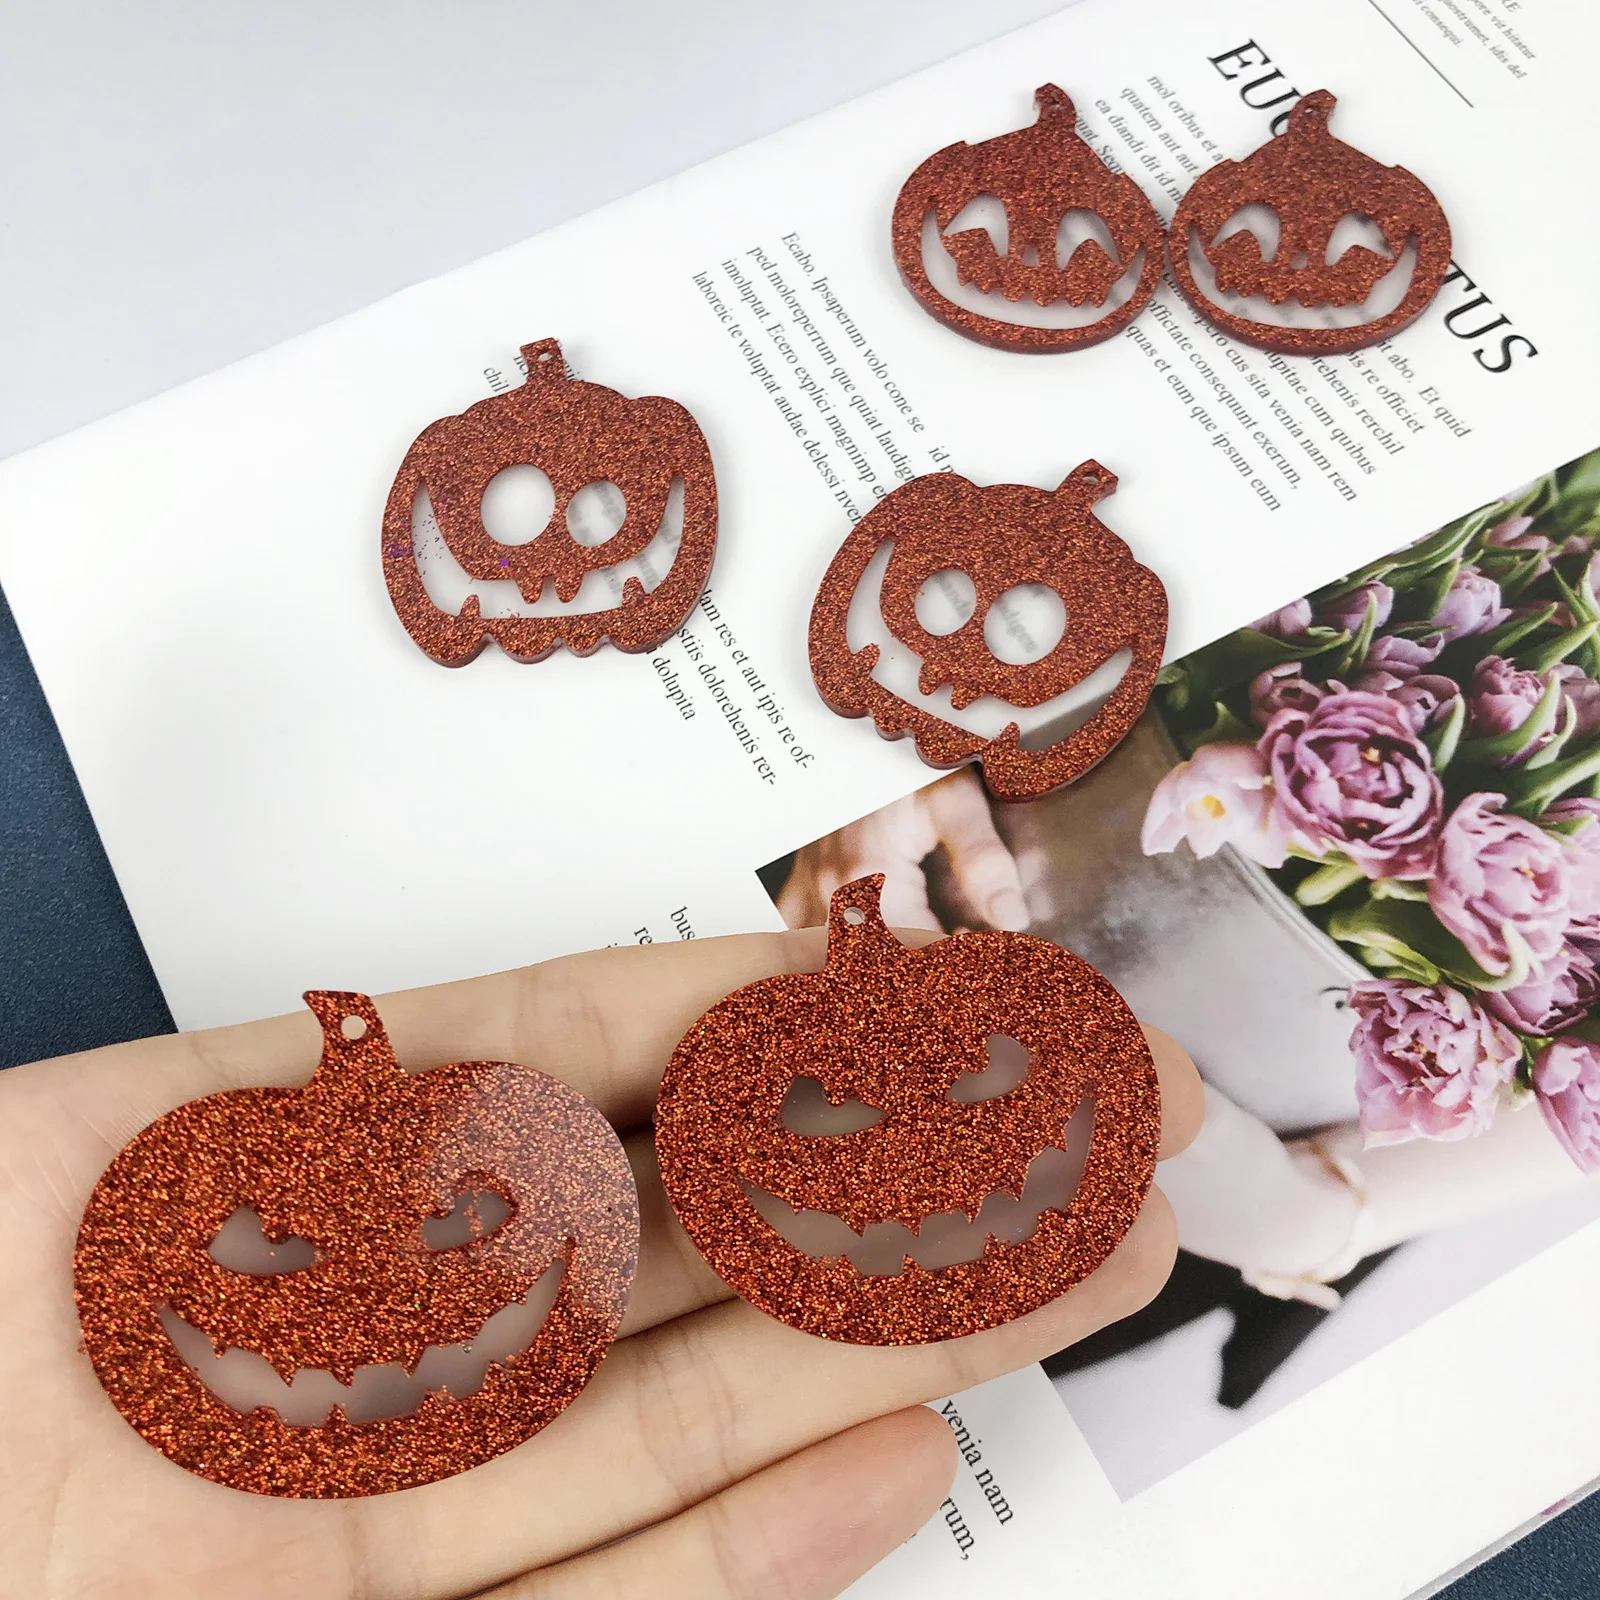 9057 Pumpkin Epoxy Pendant Molds Resin Earring Molds Earring Stud